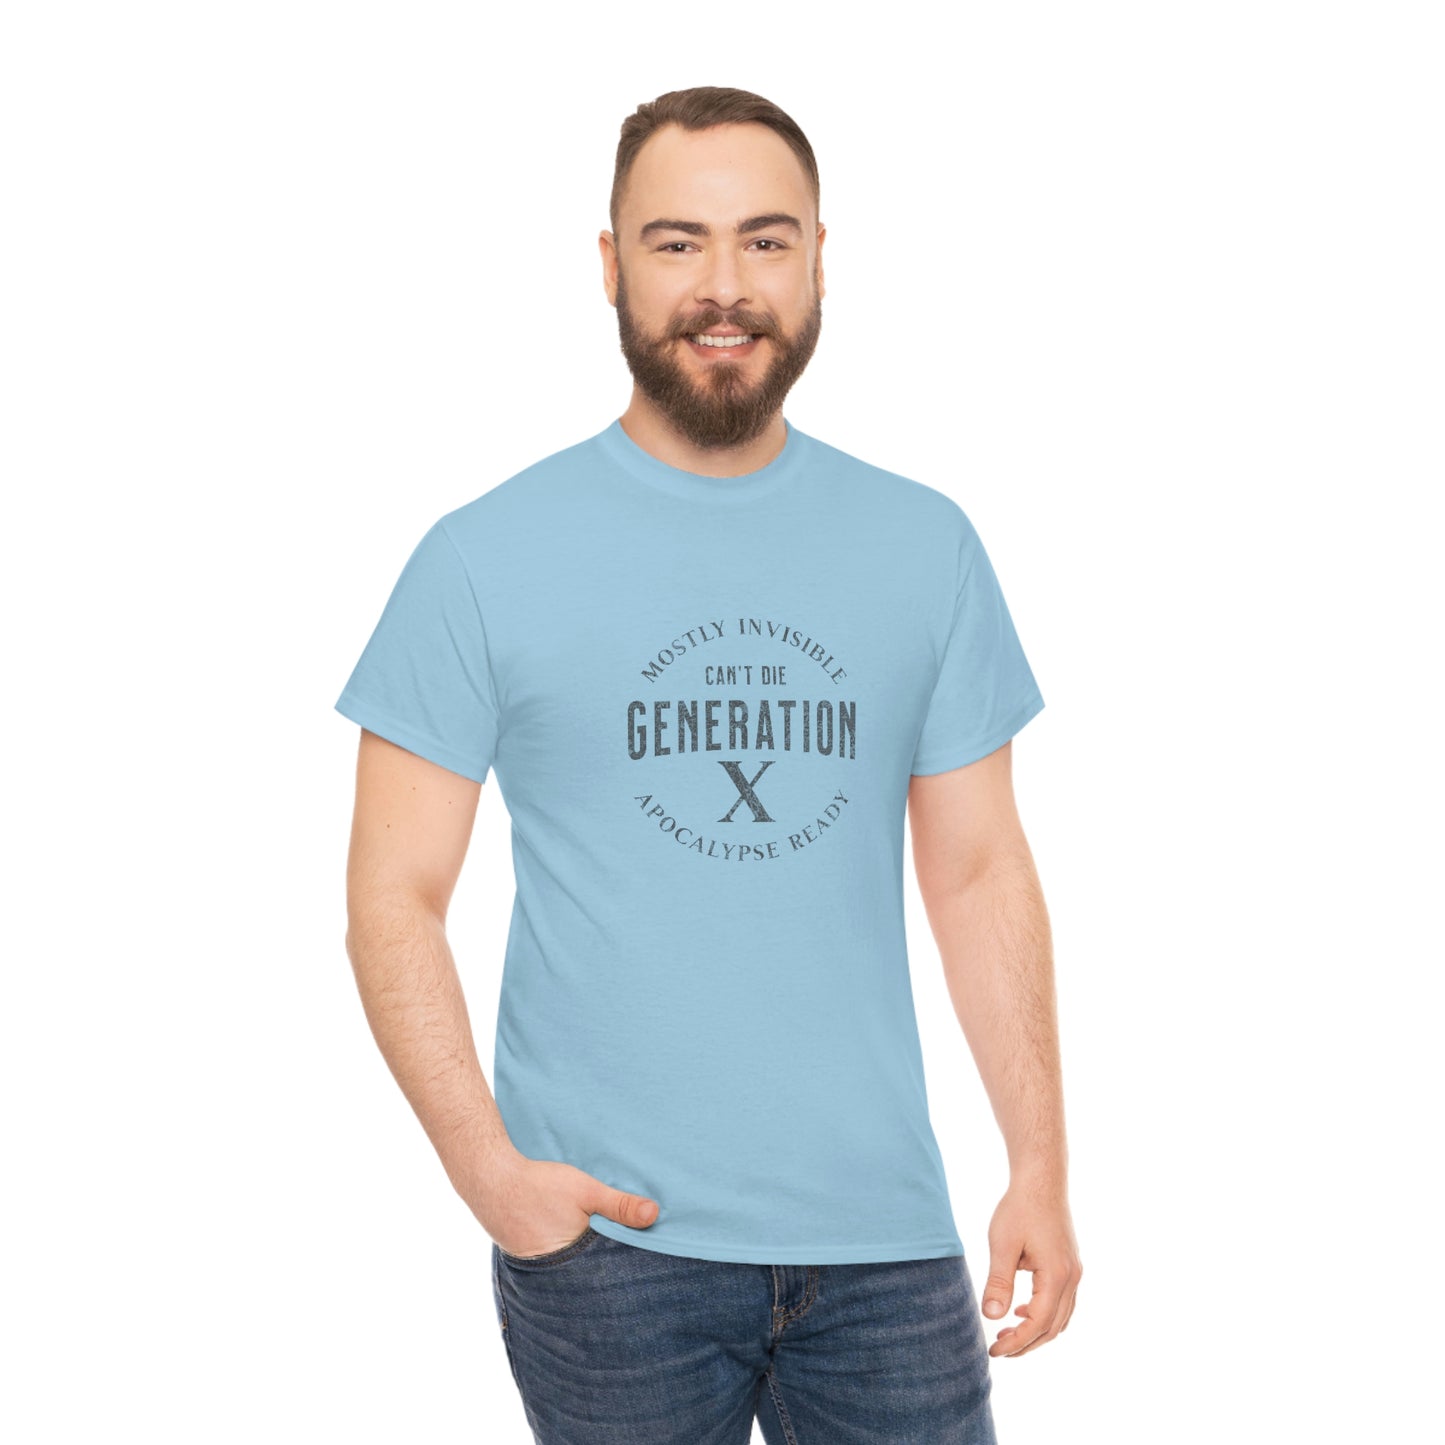 Generation X (Light) Unisex Cotton T-shirt